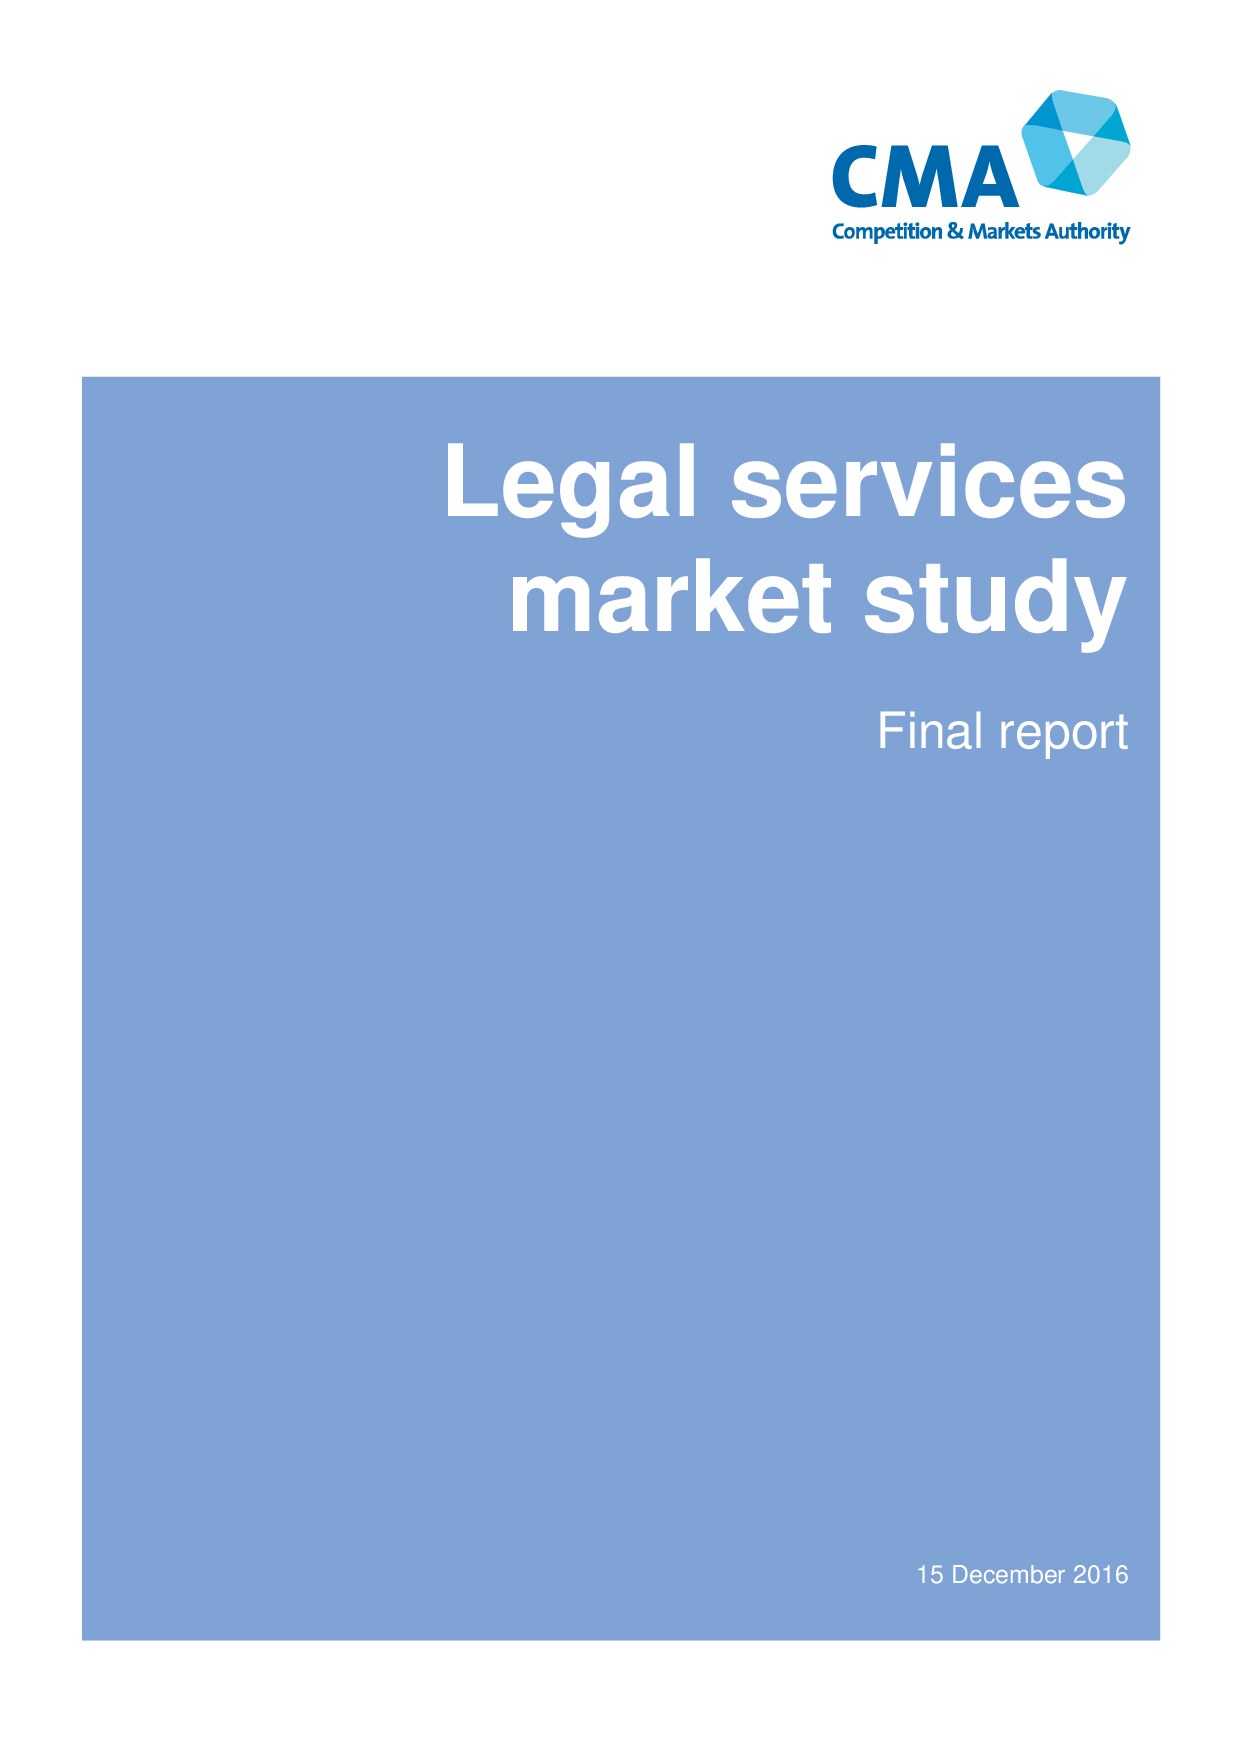 Legal services market study: Final report